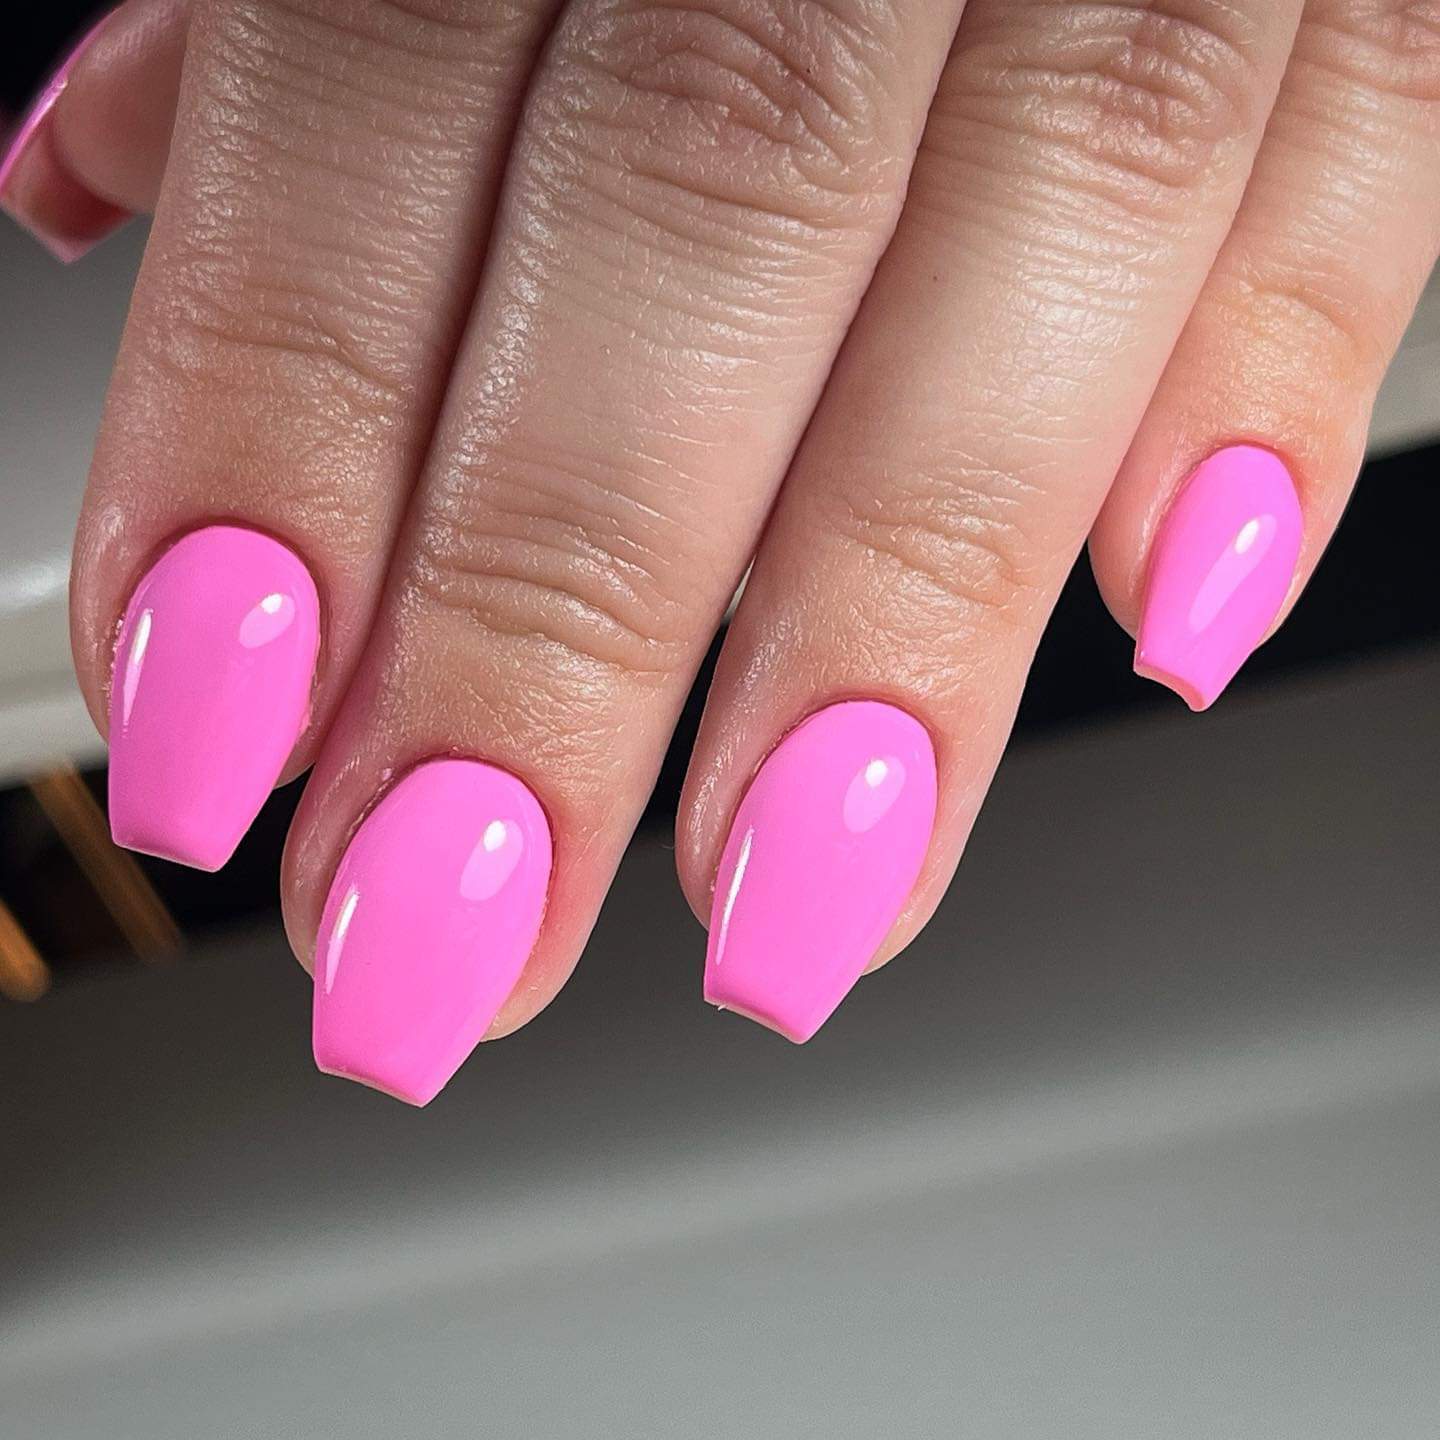 Buy Luxury Summer Hot Pink Swirl Gel Press on Nails Online in India - Etsy